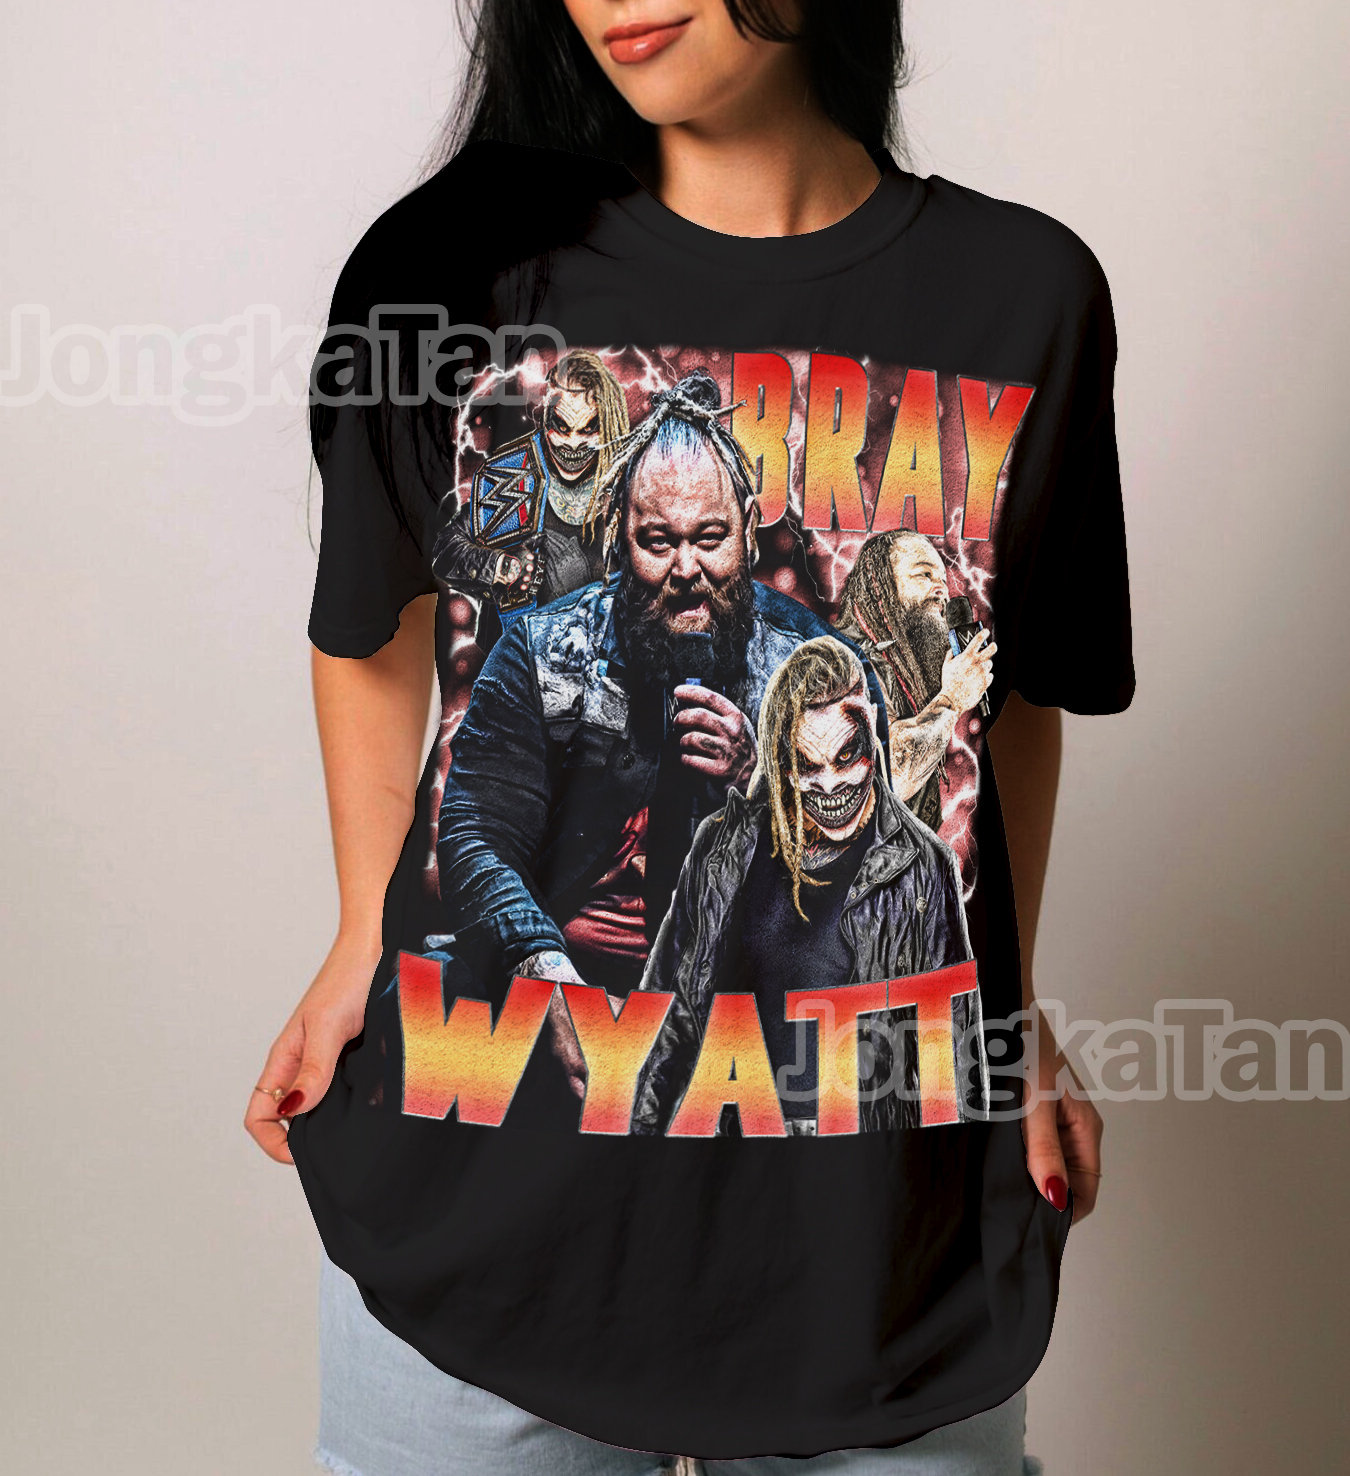 R.I.P Bray Wyatt Vintage T-shirt, the Fiend Comfort Colors Shirt